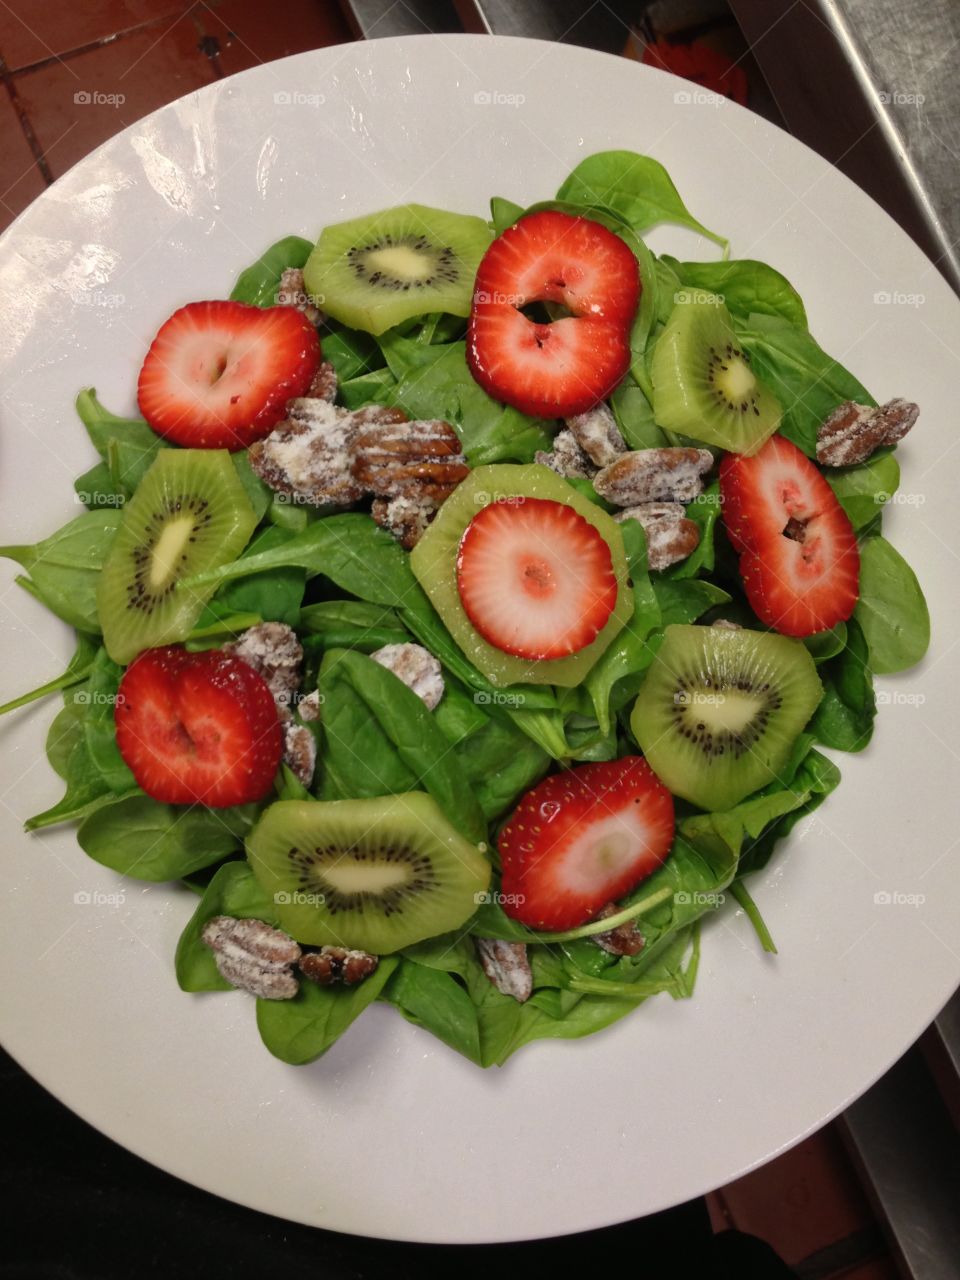 Strawberry Kiwi pecan salad. Food at work